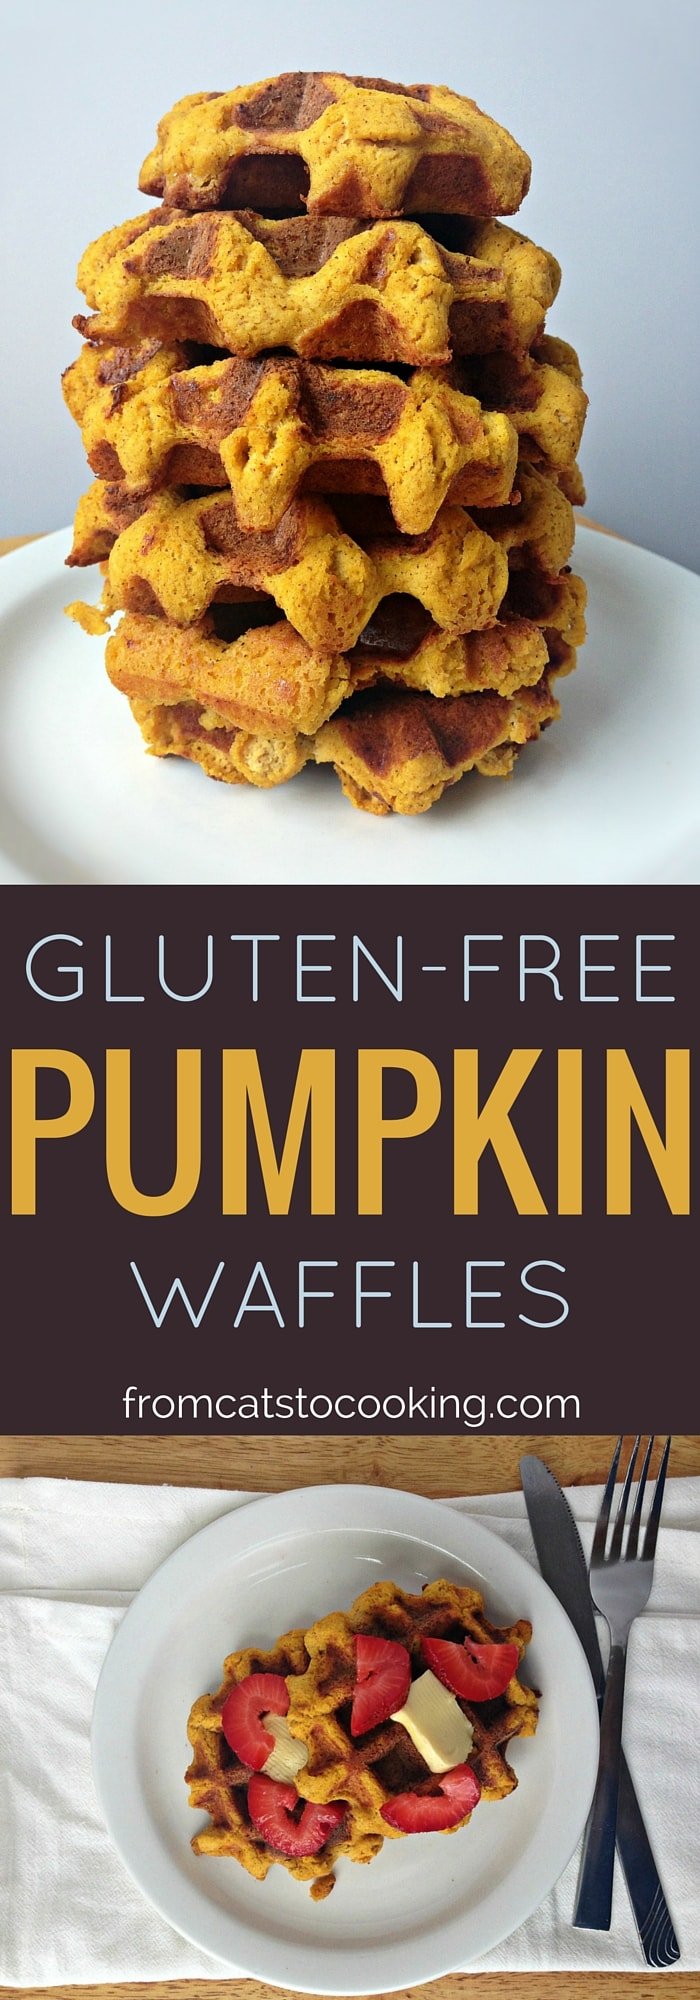 Gluten-free Pumpkin Waffles Recipe. Great for breakfast and brunch! Dairy-free, Gluten-free, Paleo| fromcatstocooking.com